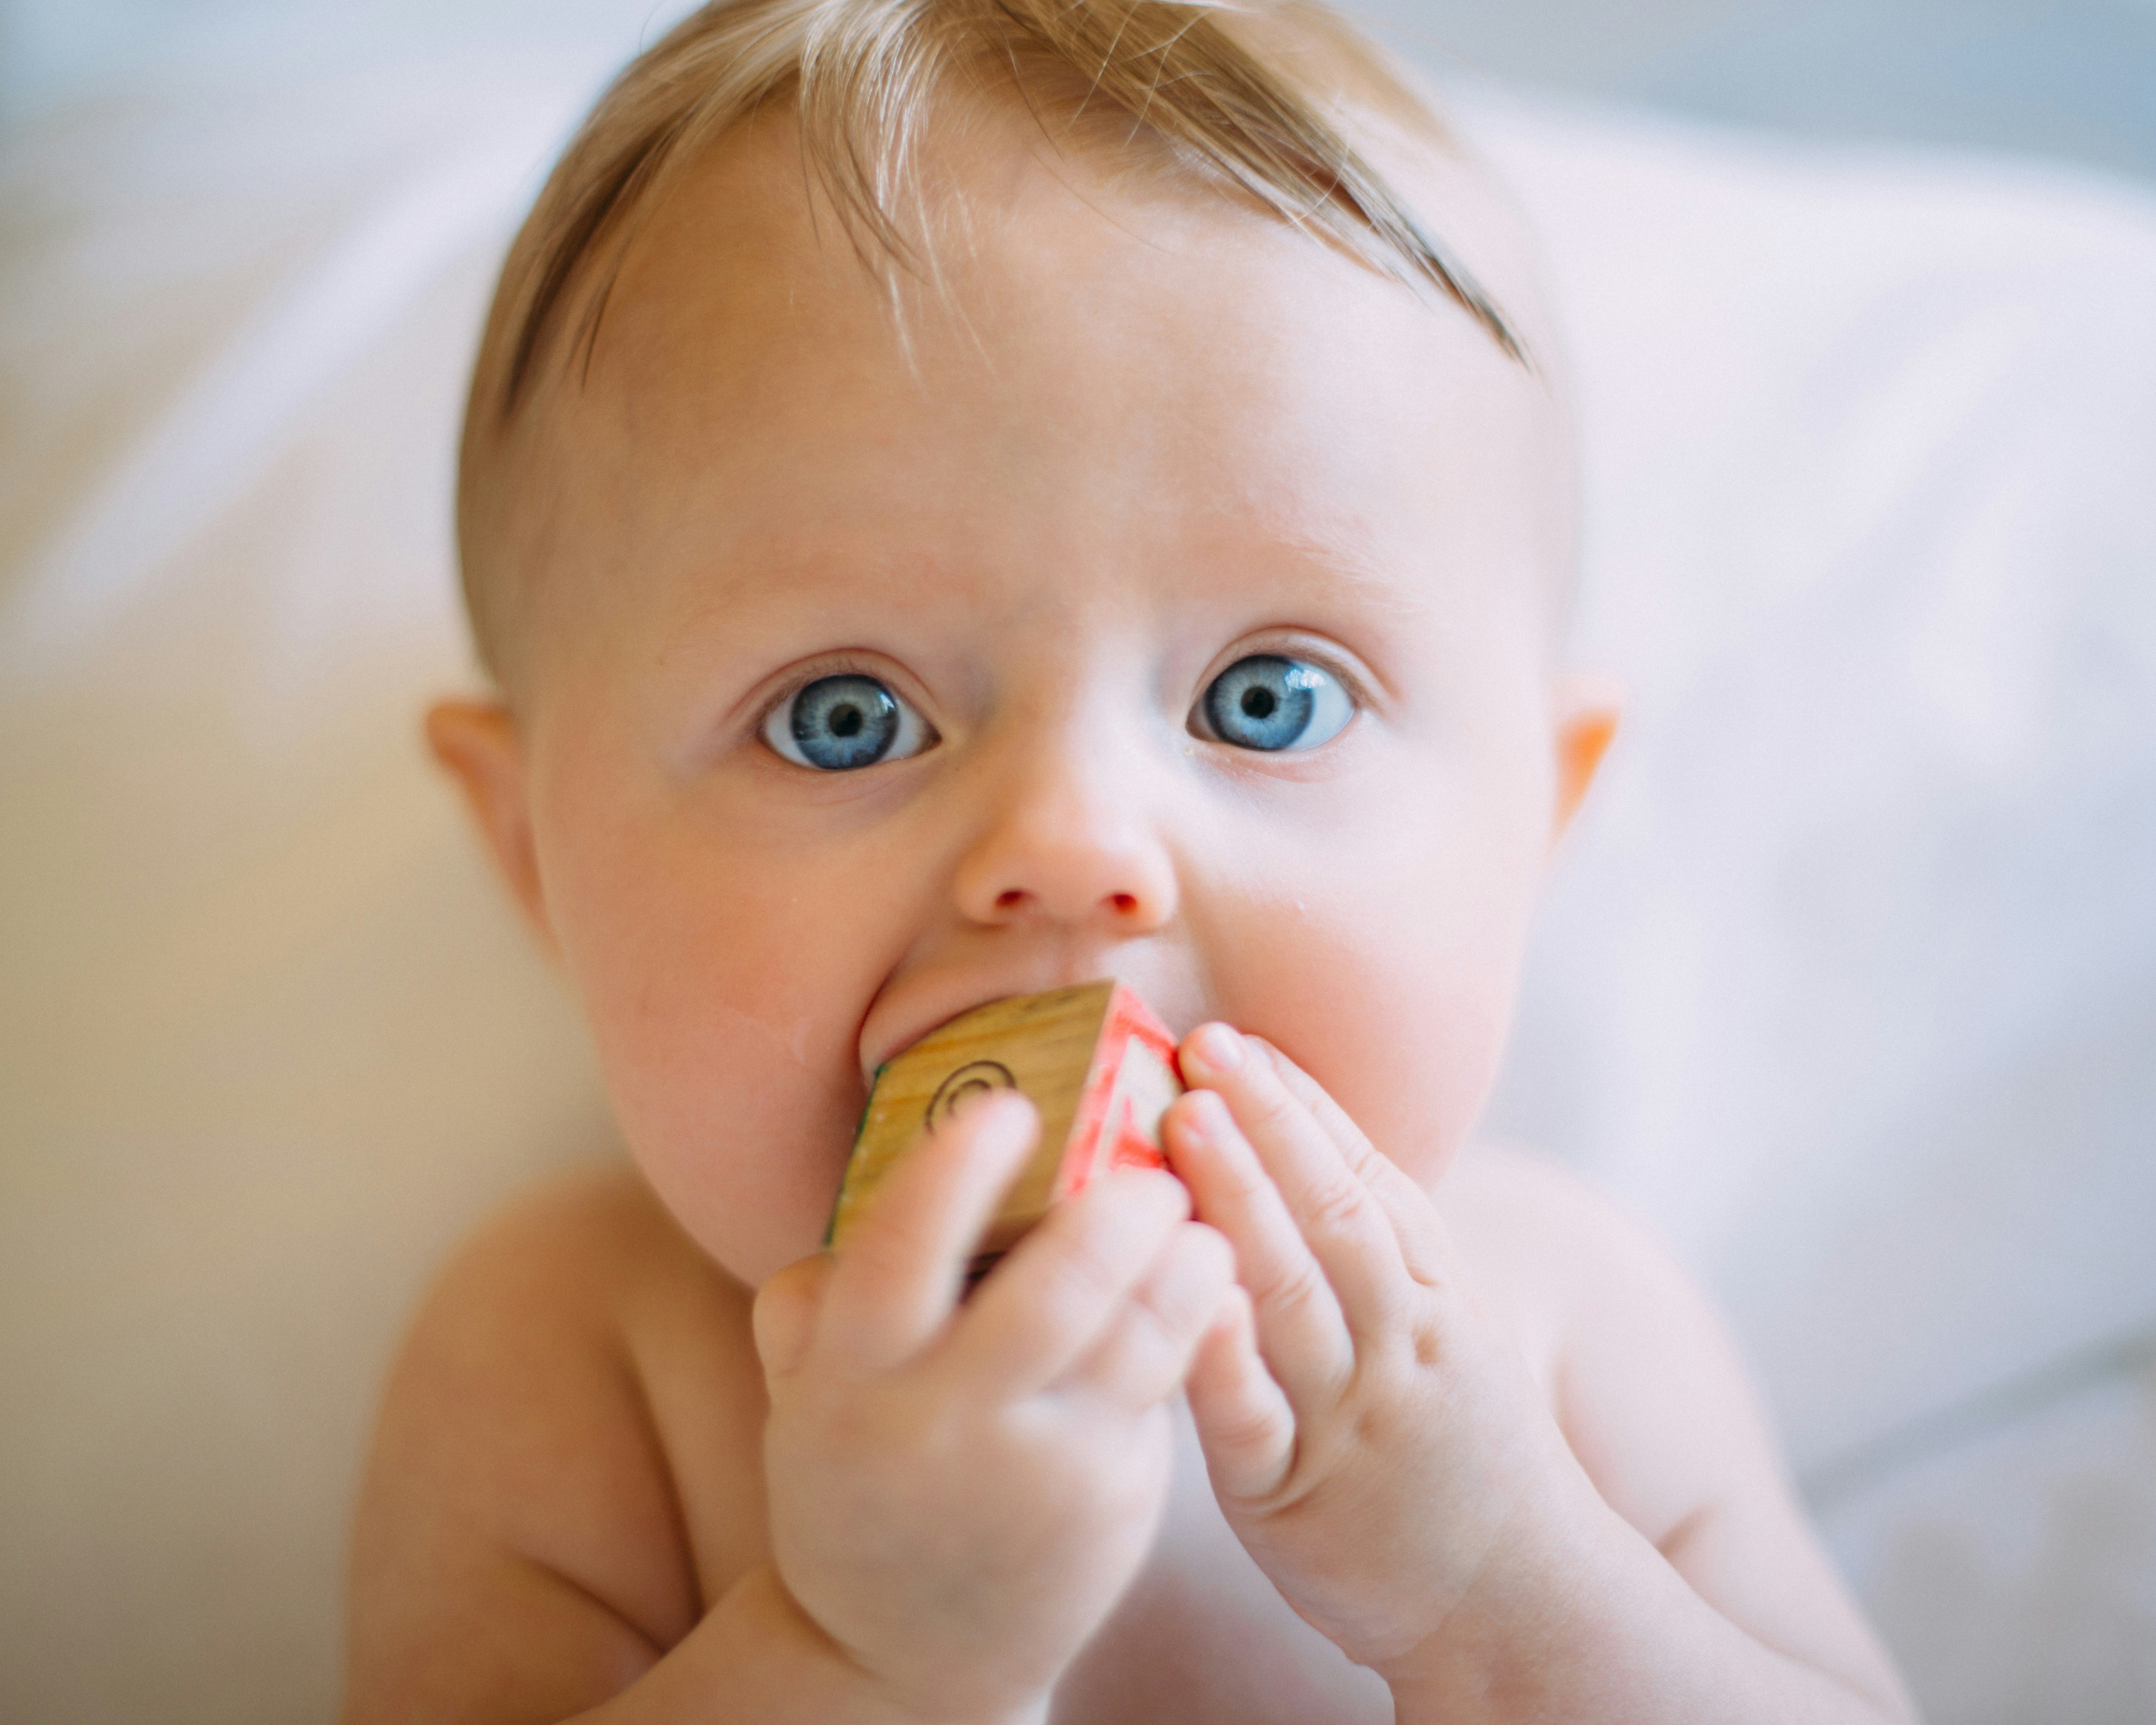 A teething baby | Source: Unplash